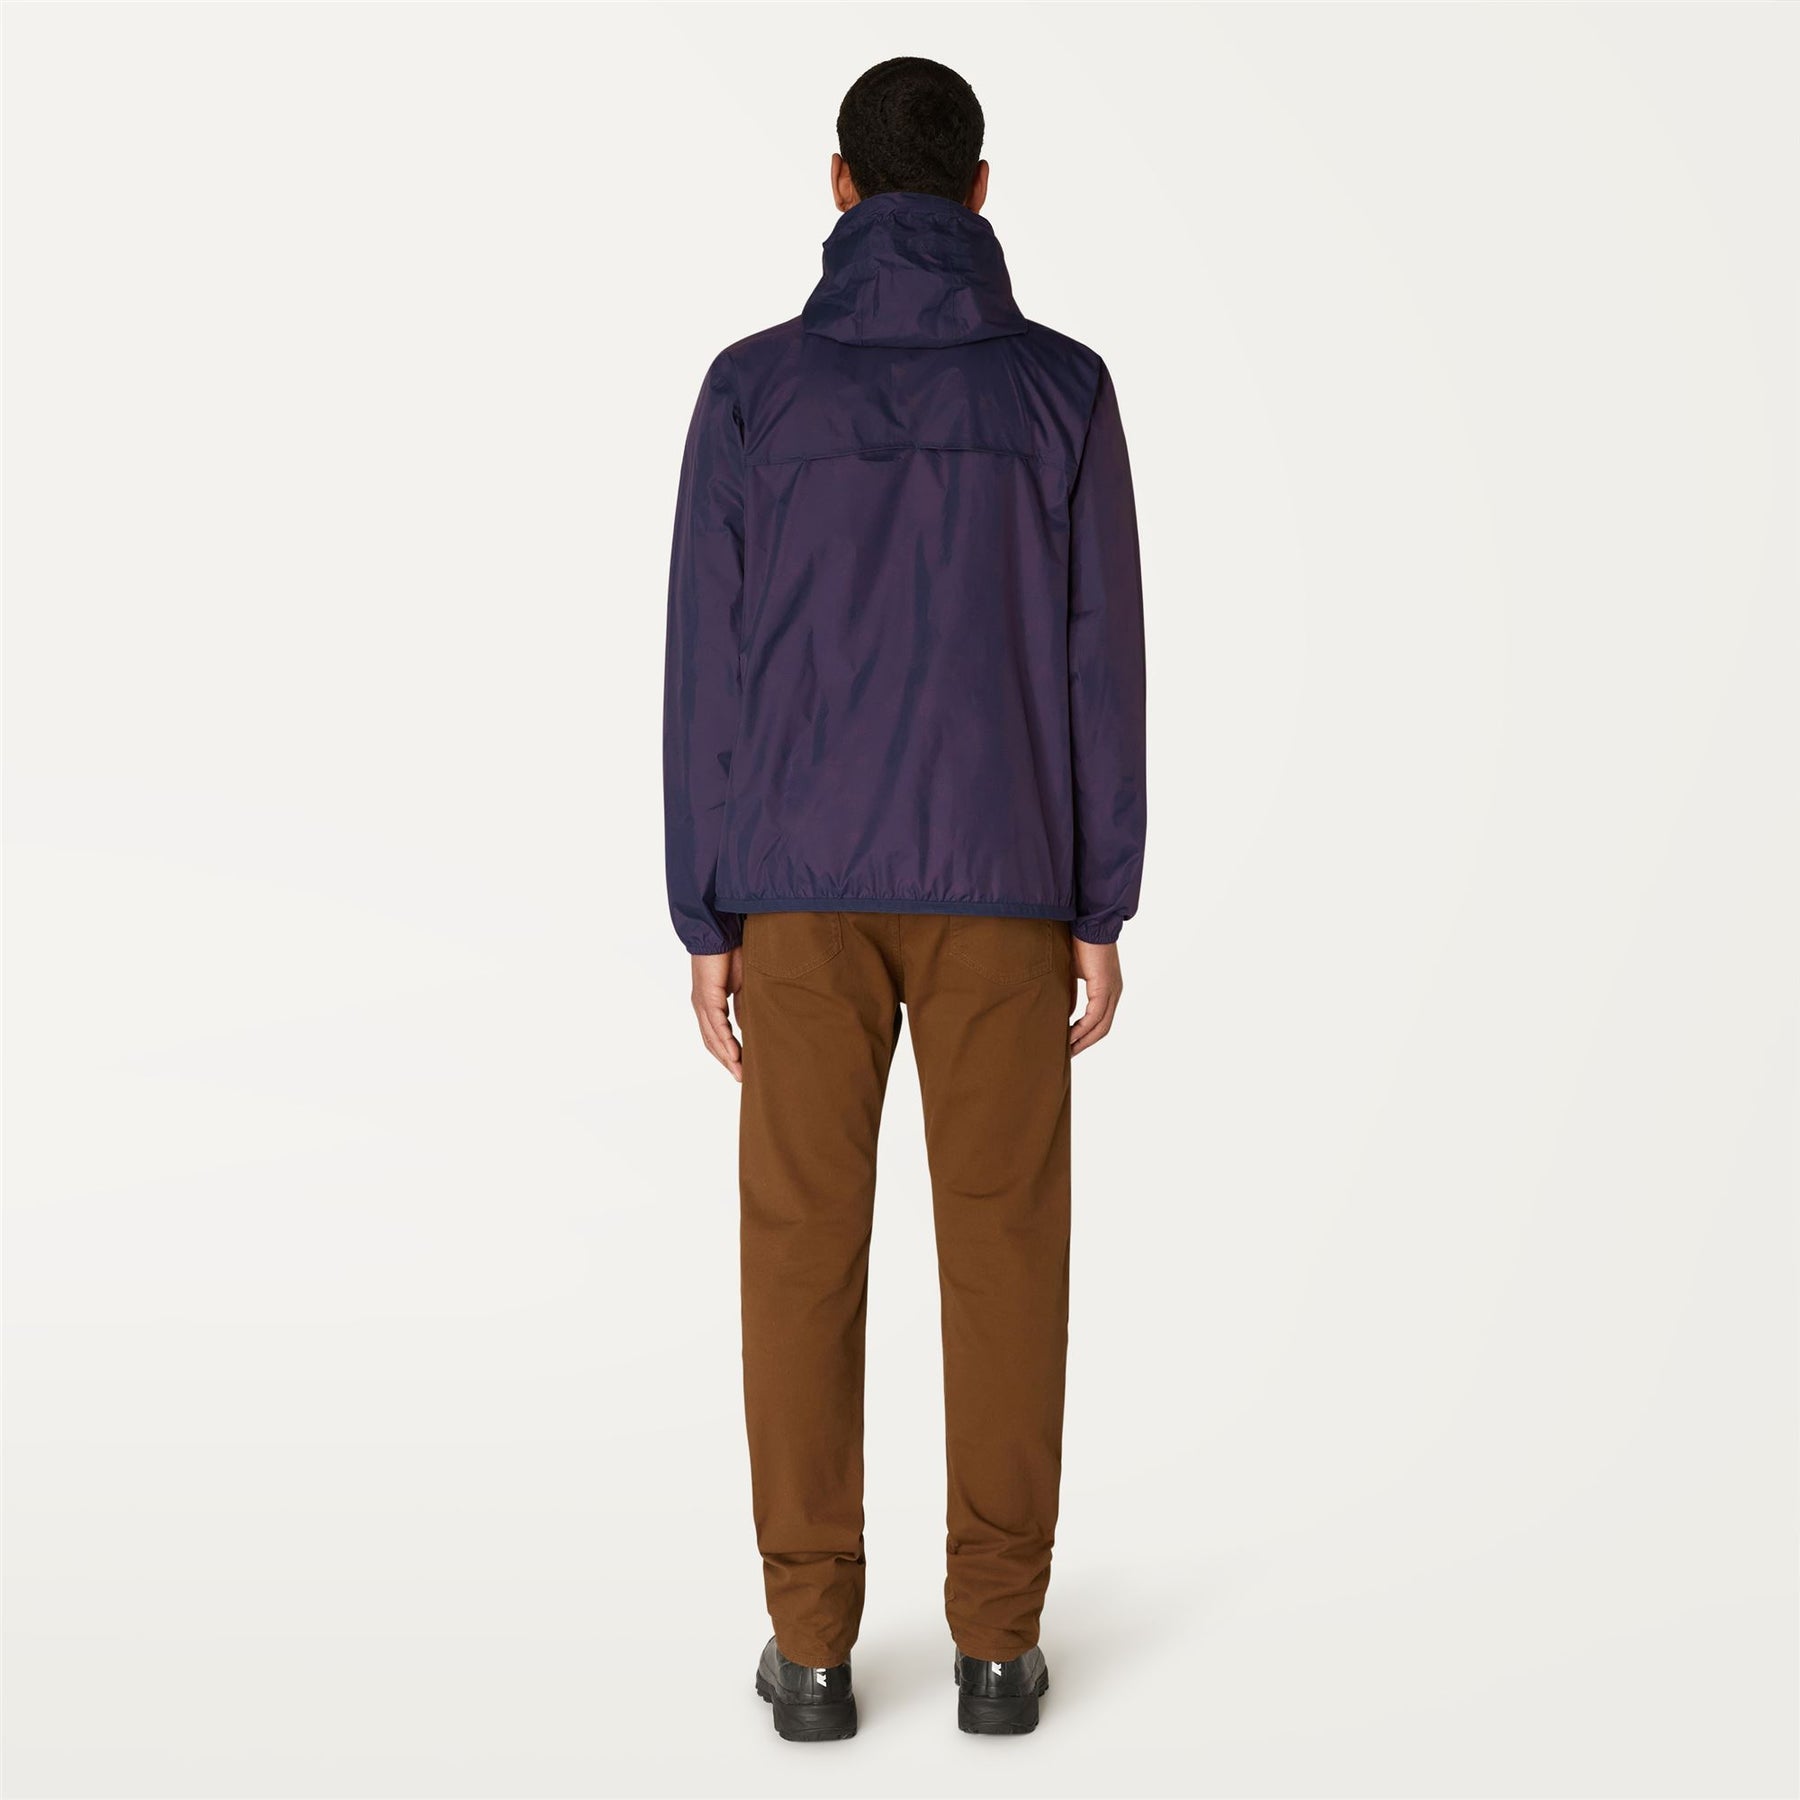 Claude - Unisex Packable Full Zip Waterproof  Rain Jacket in Violet